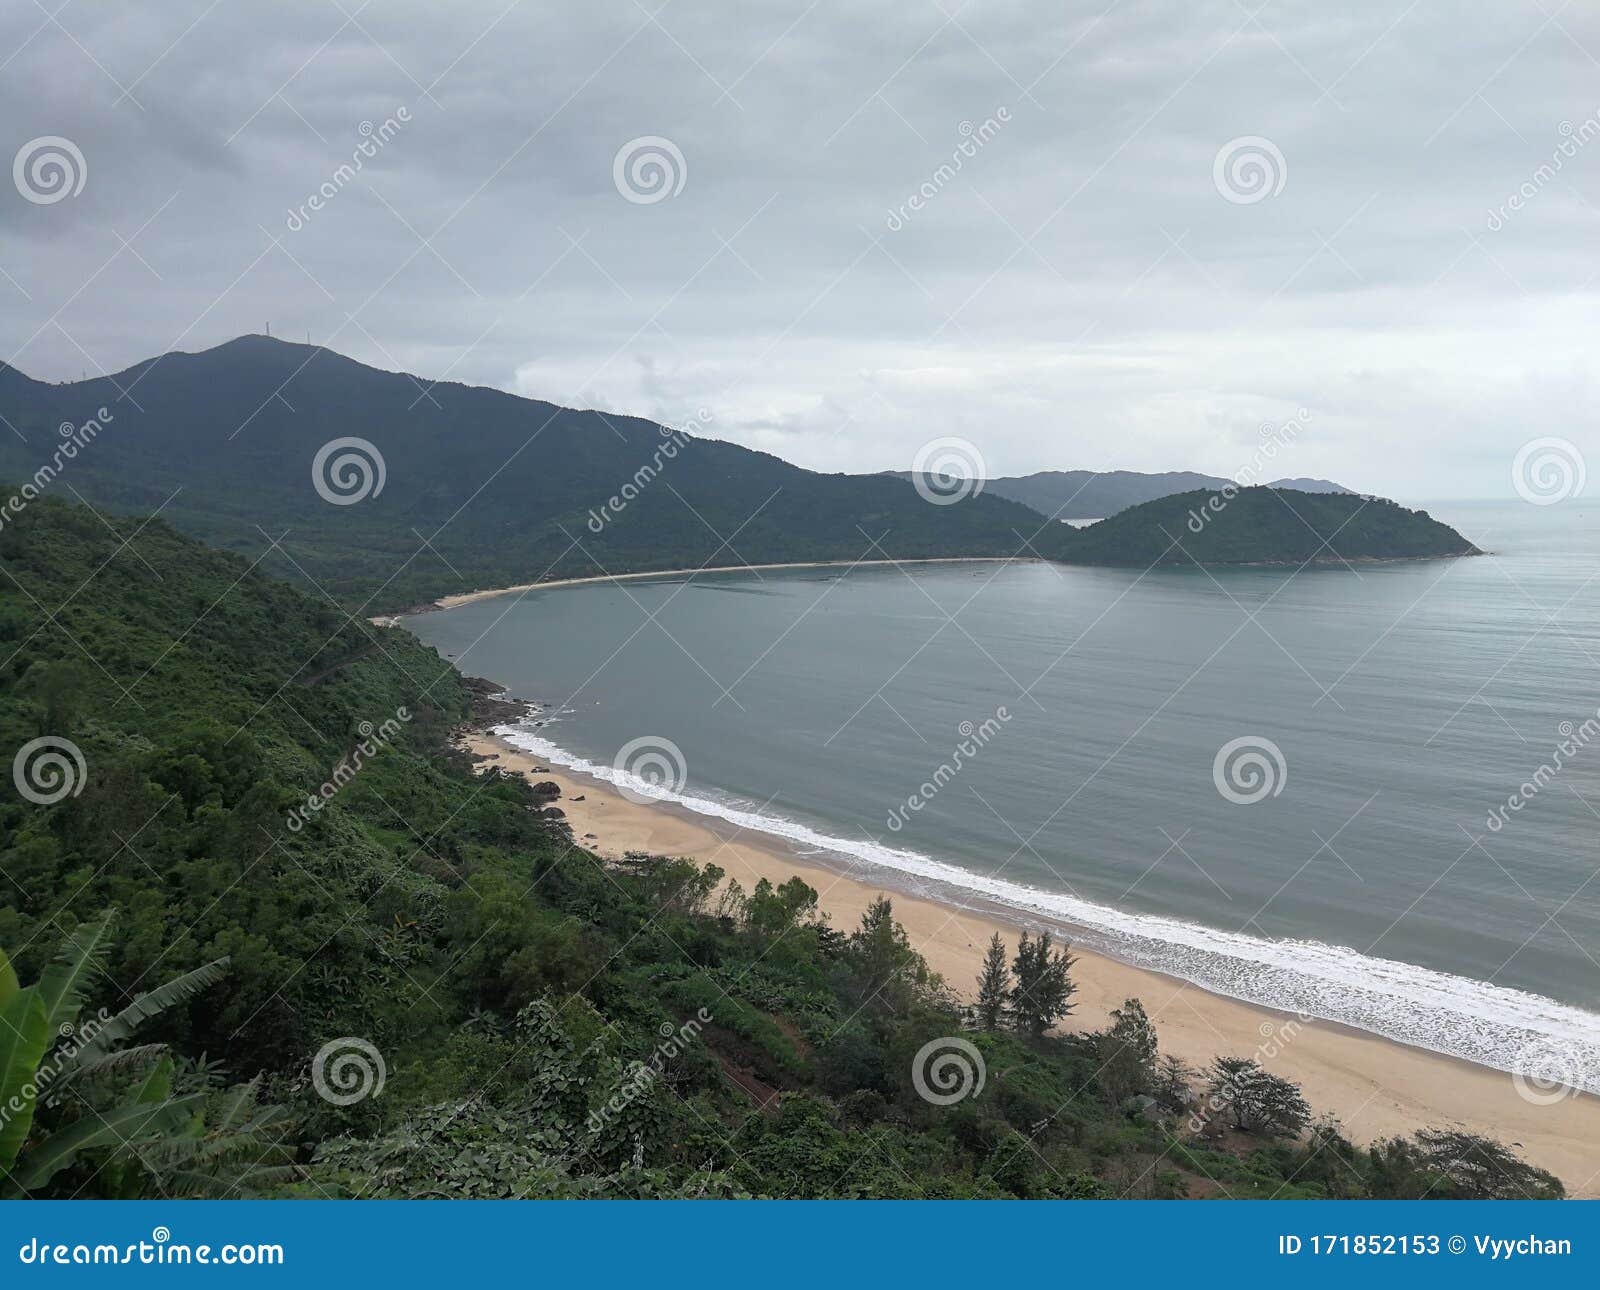 southeast asia central vietnam danang to hue hai van pass phu tho lang co beach scenery landscape